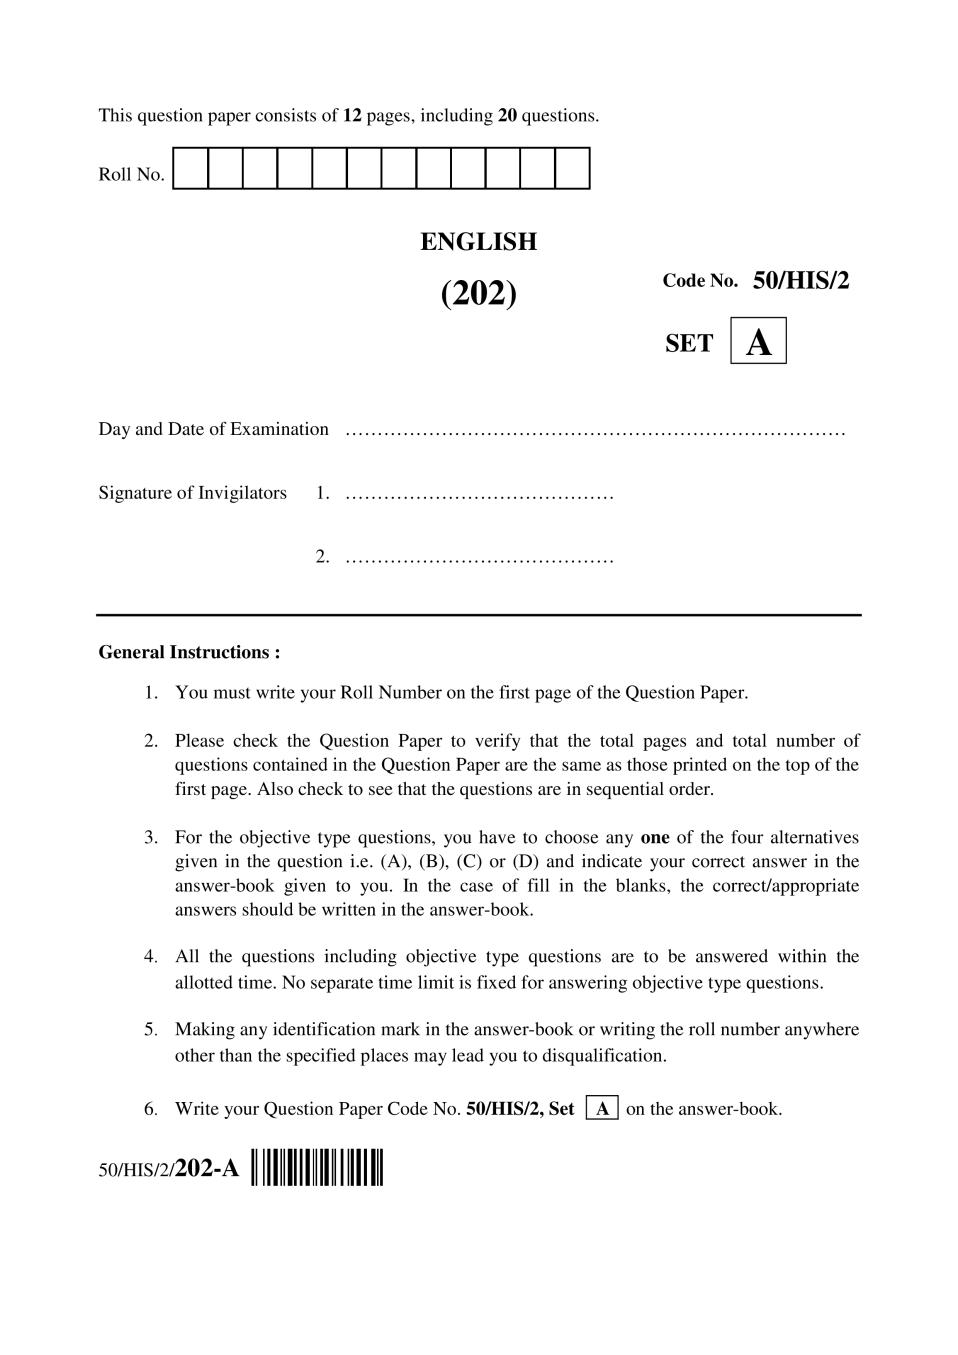 NIOS Class 10 Question Paper Apr 2015 - English - Page 1